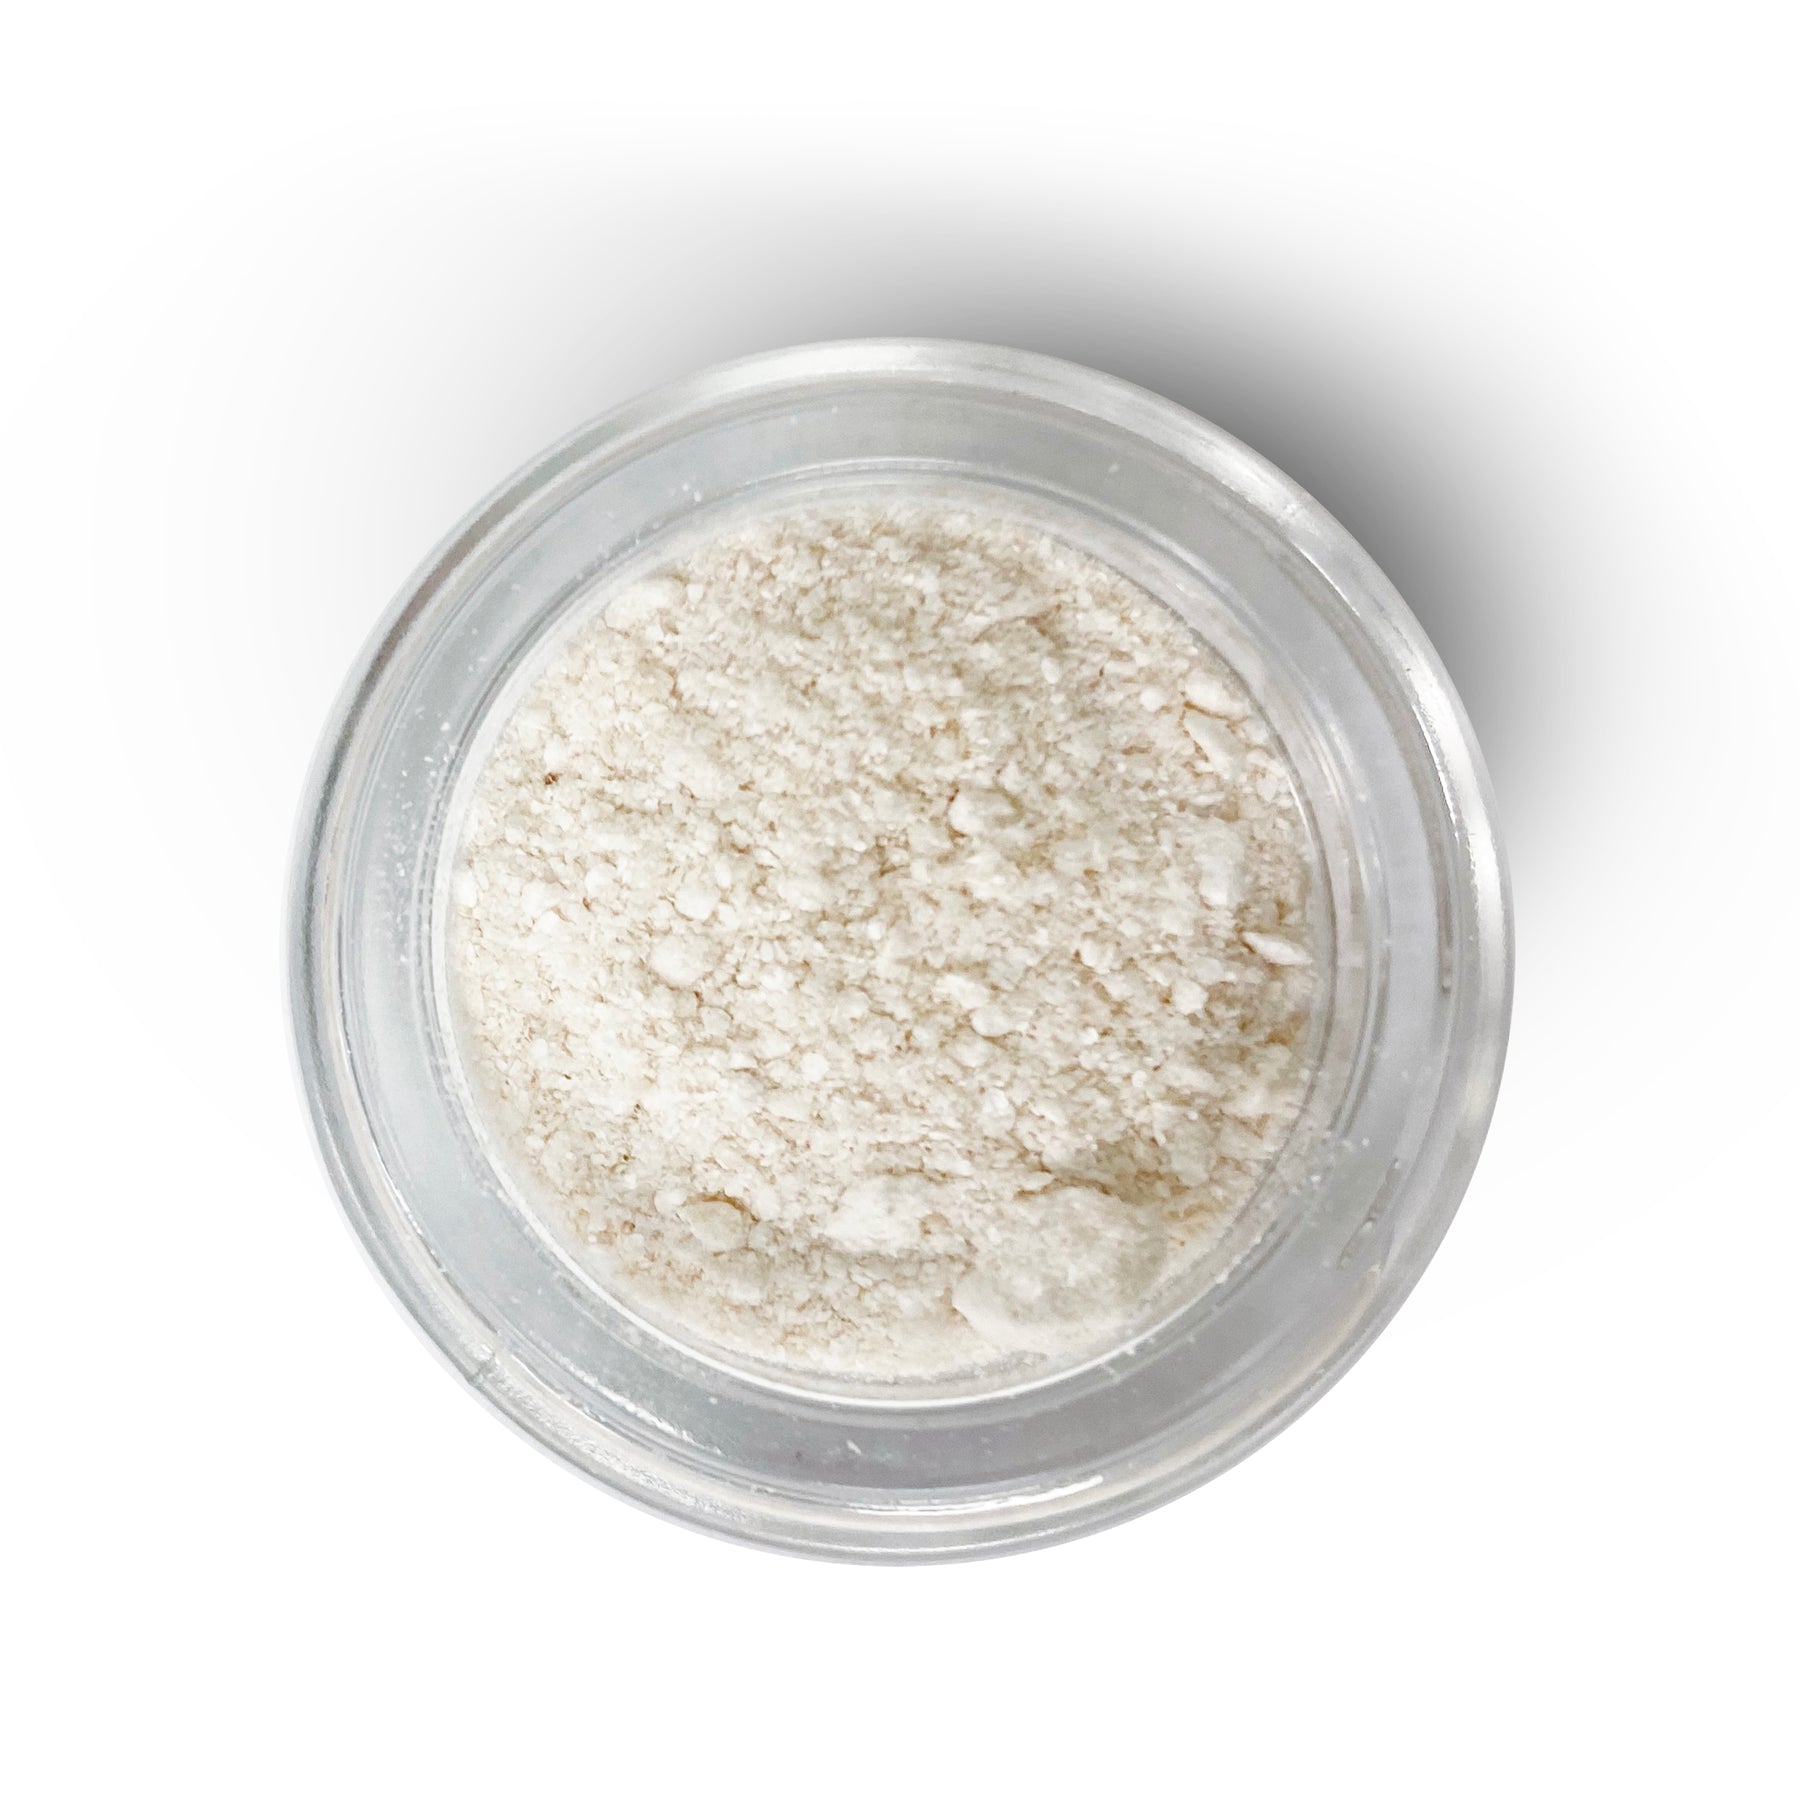 CBG Snow 99%+ Pure CBG Isolate Powder